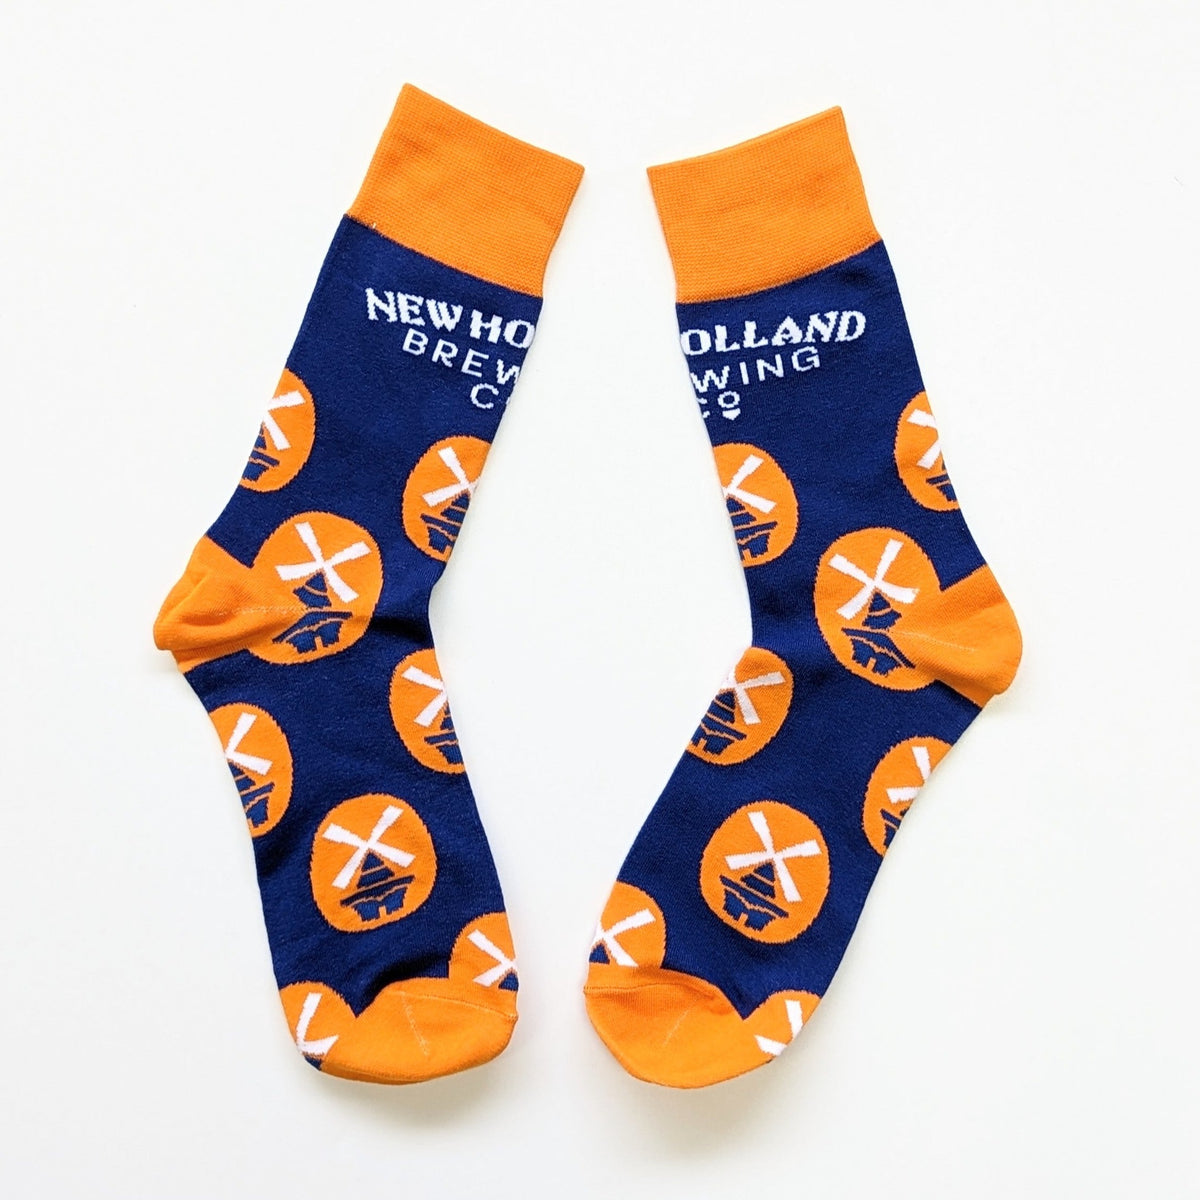 New York Giants Socks Accessories